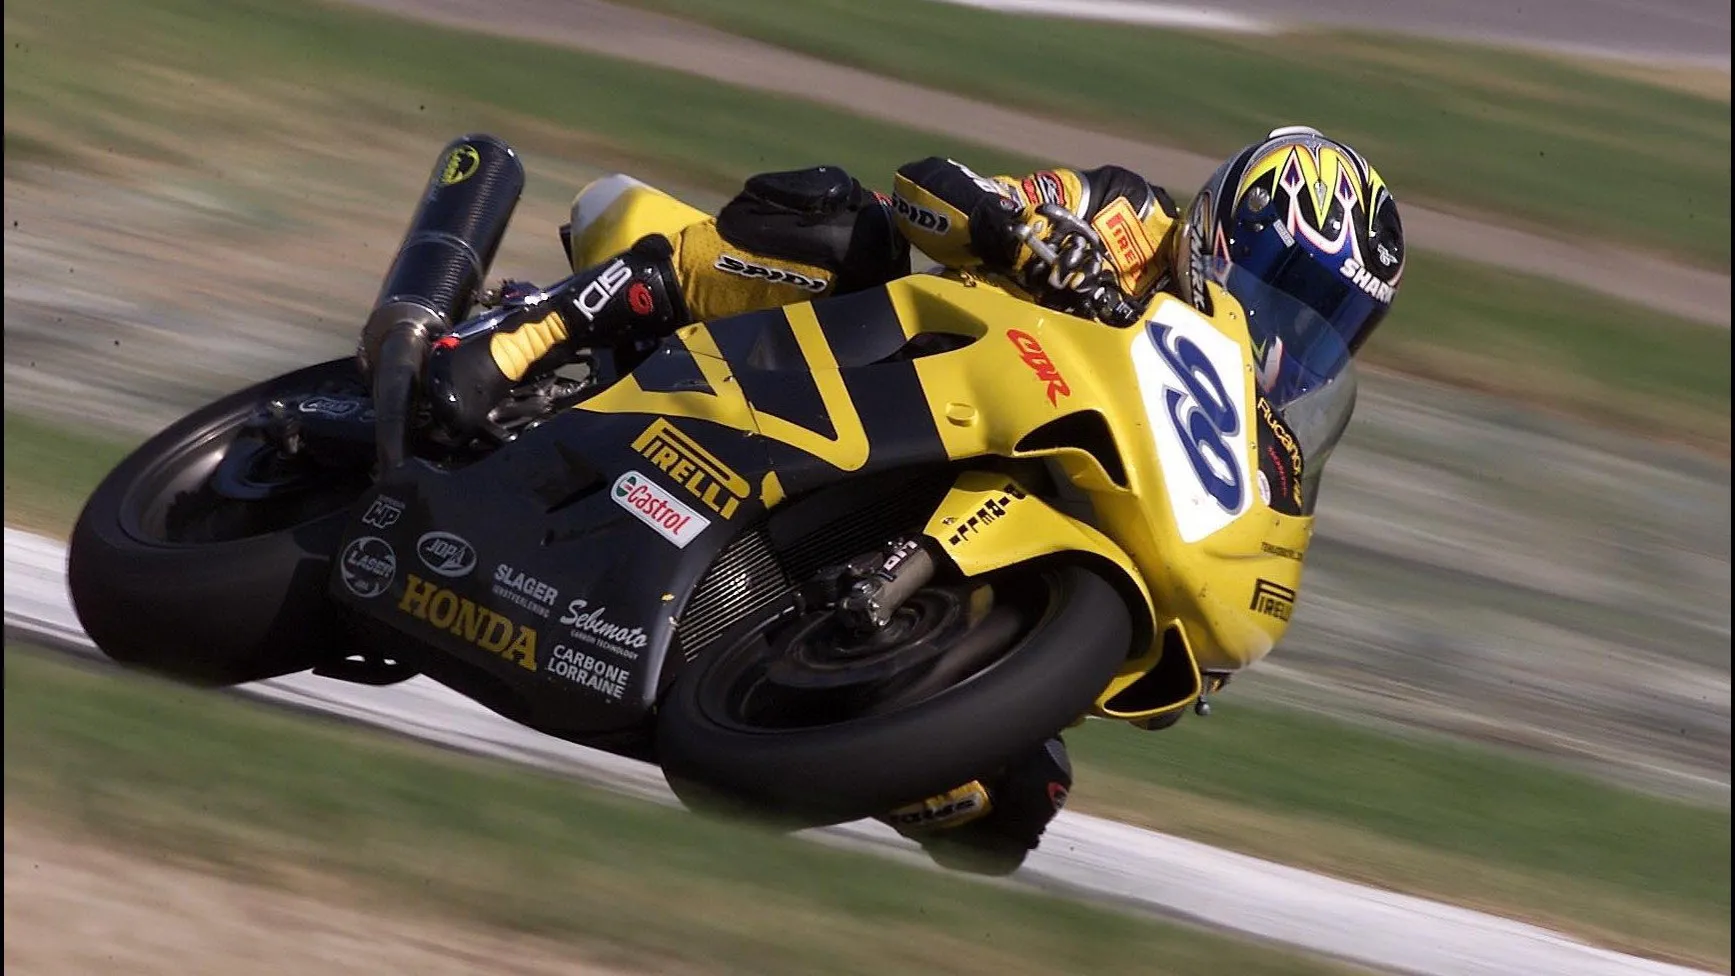 Moto del día: Honda CBR600F Superport Ten Kate (2002)